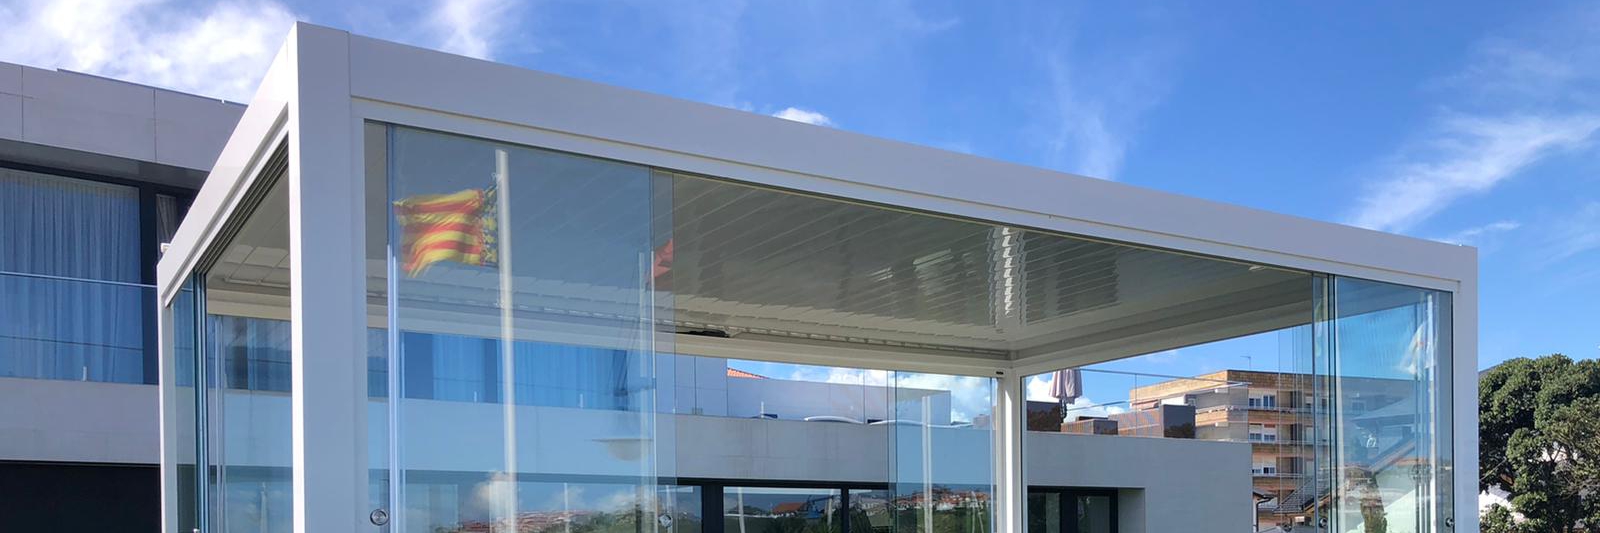 freistehende Glasoase mit festem Dach